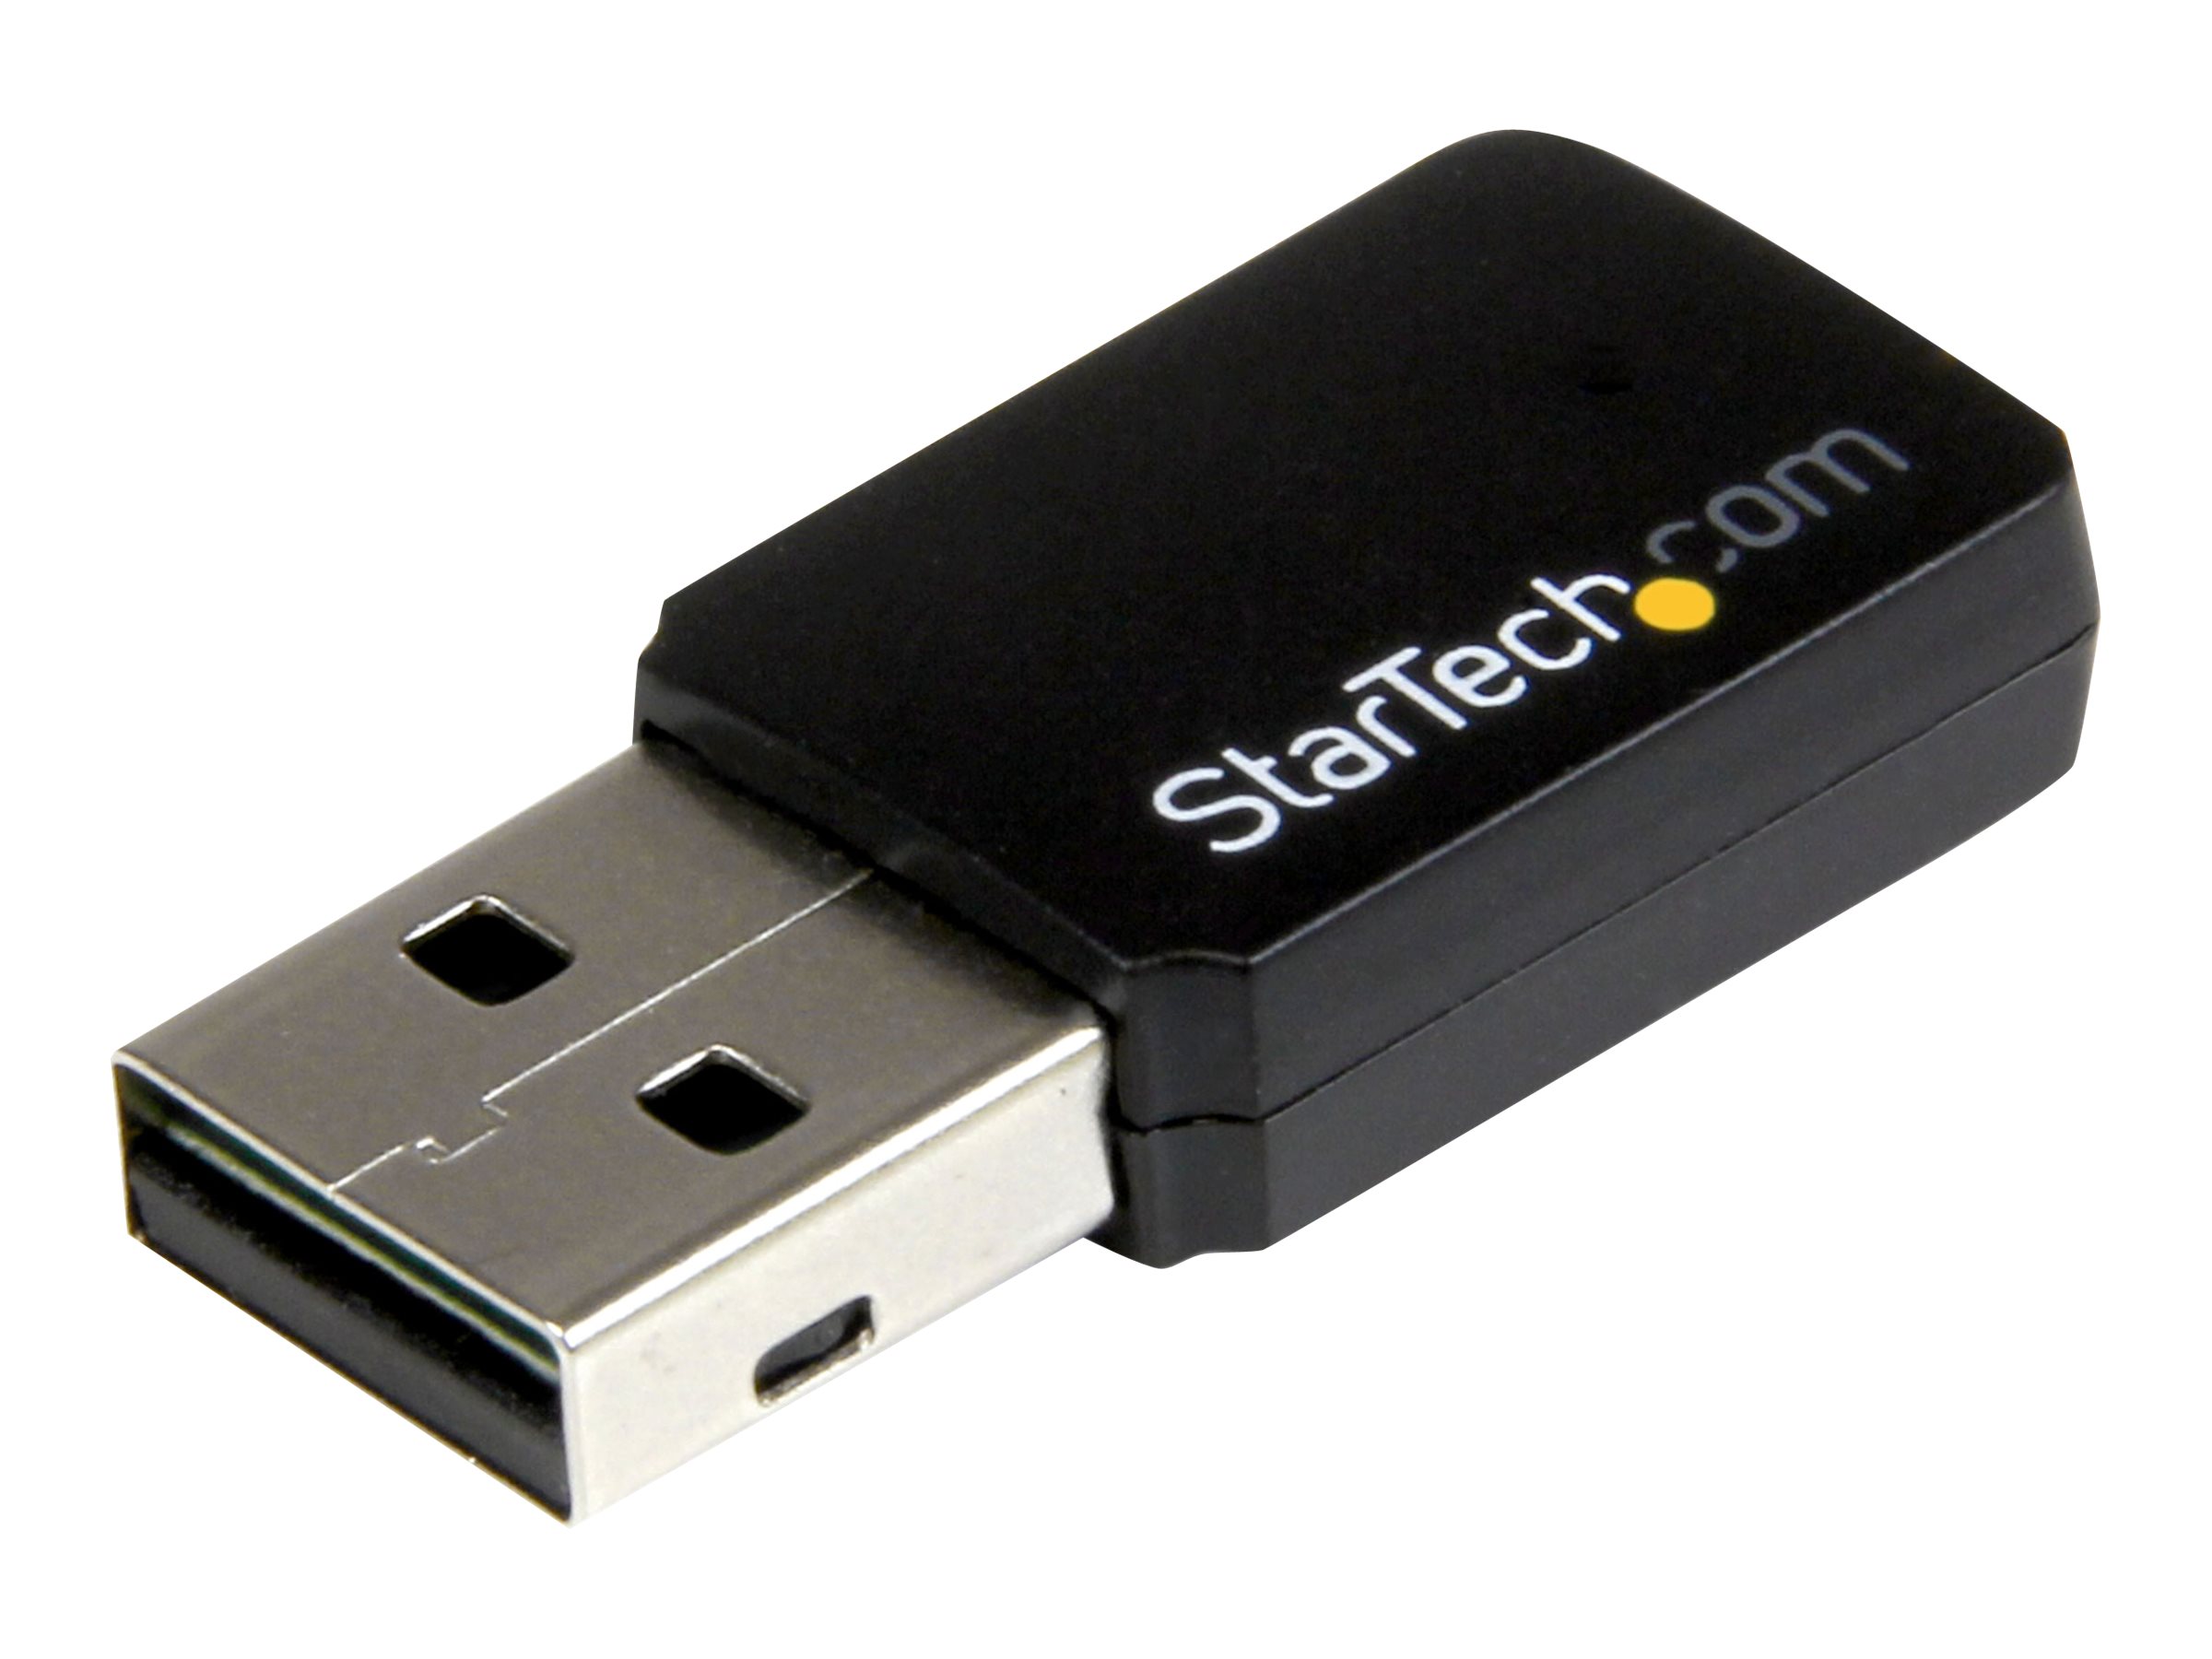 StarTech.com USB 2.0 AC600 Mini Dual Band Wireless-AC Network Adapter - 1T1R 802.11ac WiFi Adapter - 2.4GHz / 5GHz USB Wireless (USB433WACDB) - Netzwerkadapter - USB 2.0 - 802.11ac